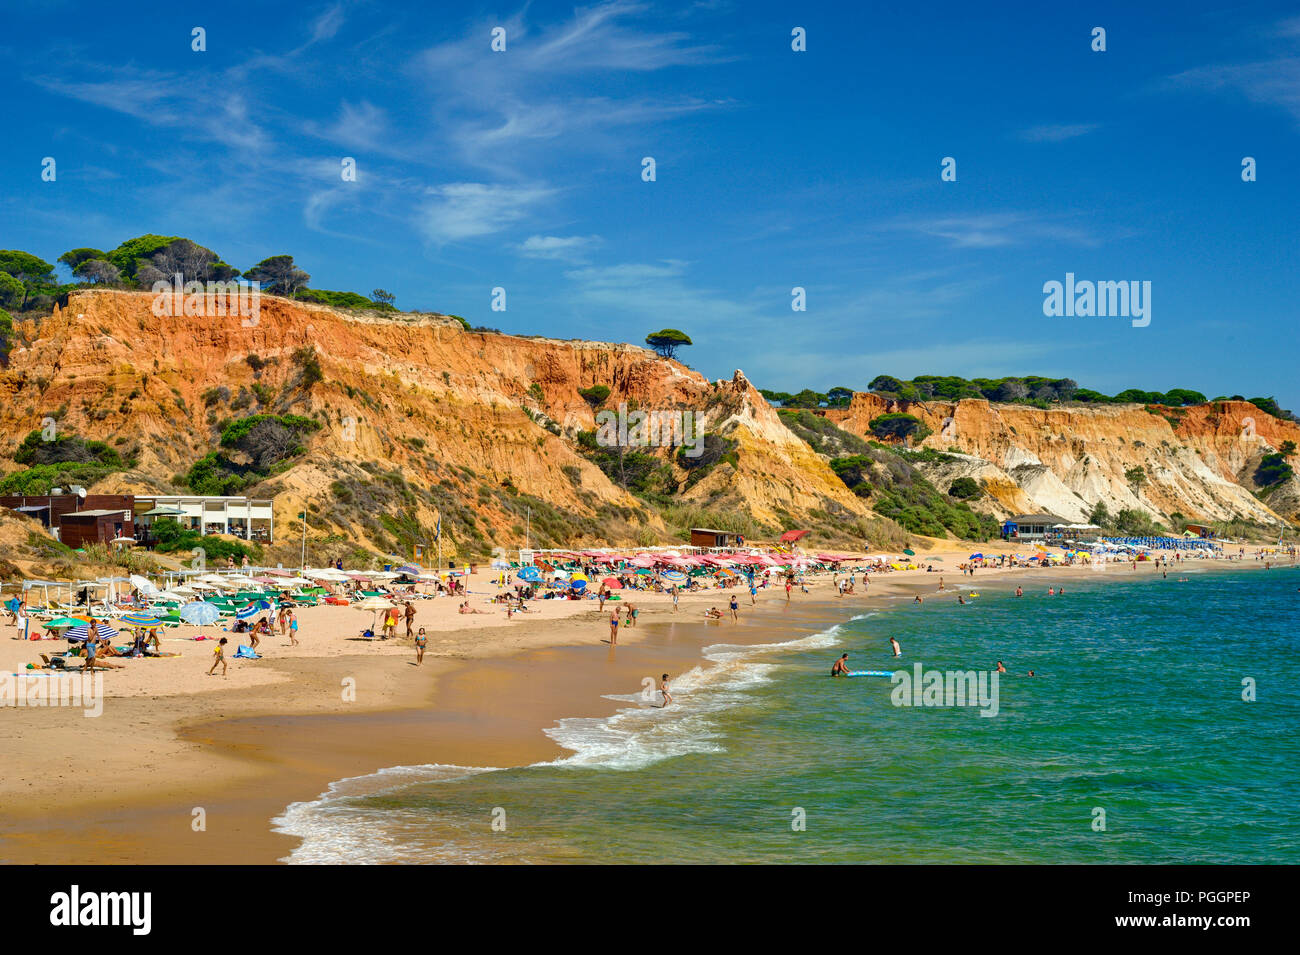 Praia da Falésia Strand unterhalb des Riu Palace Hotel (und Riu Guarana Hotel) in der Nähe von Albufeira, Algarve, Portugal Stockfoto